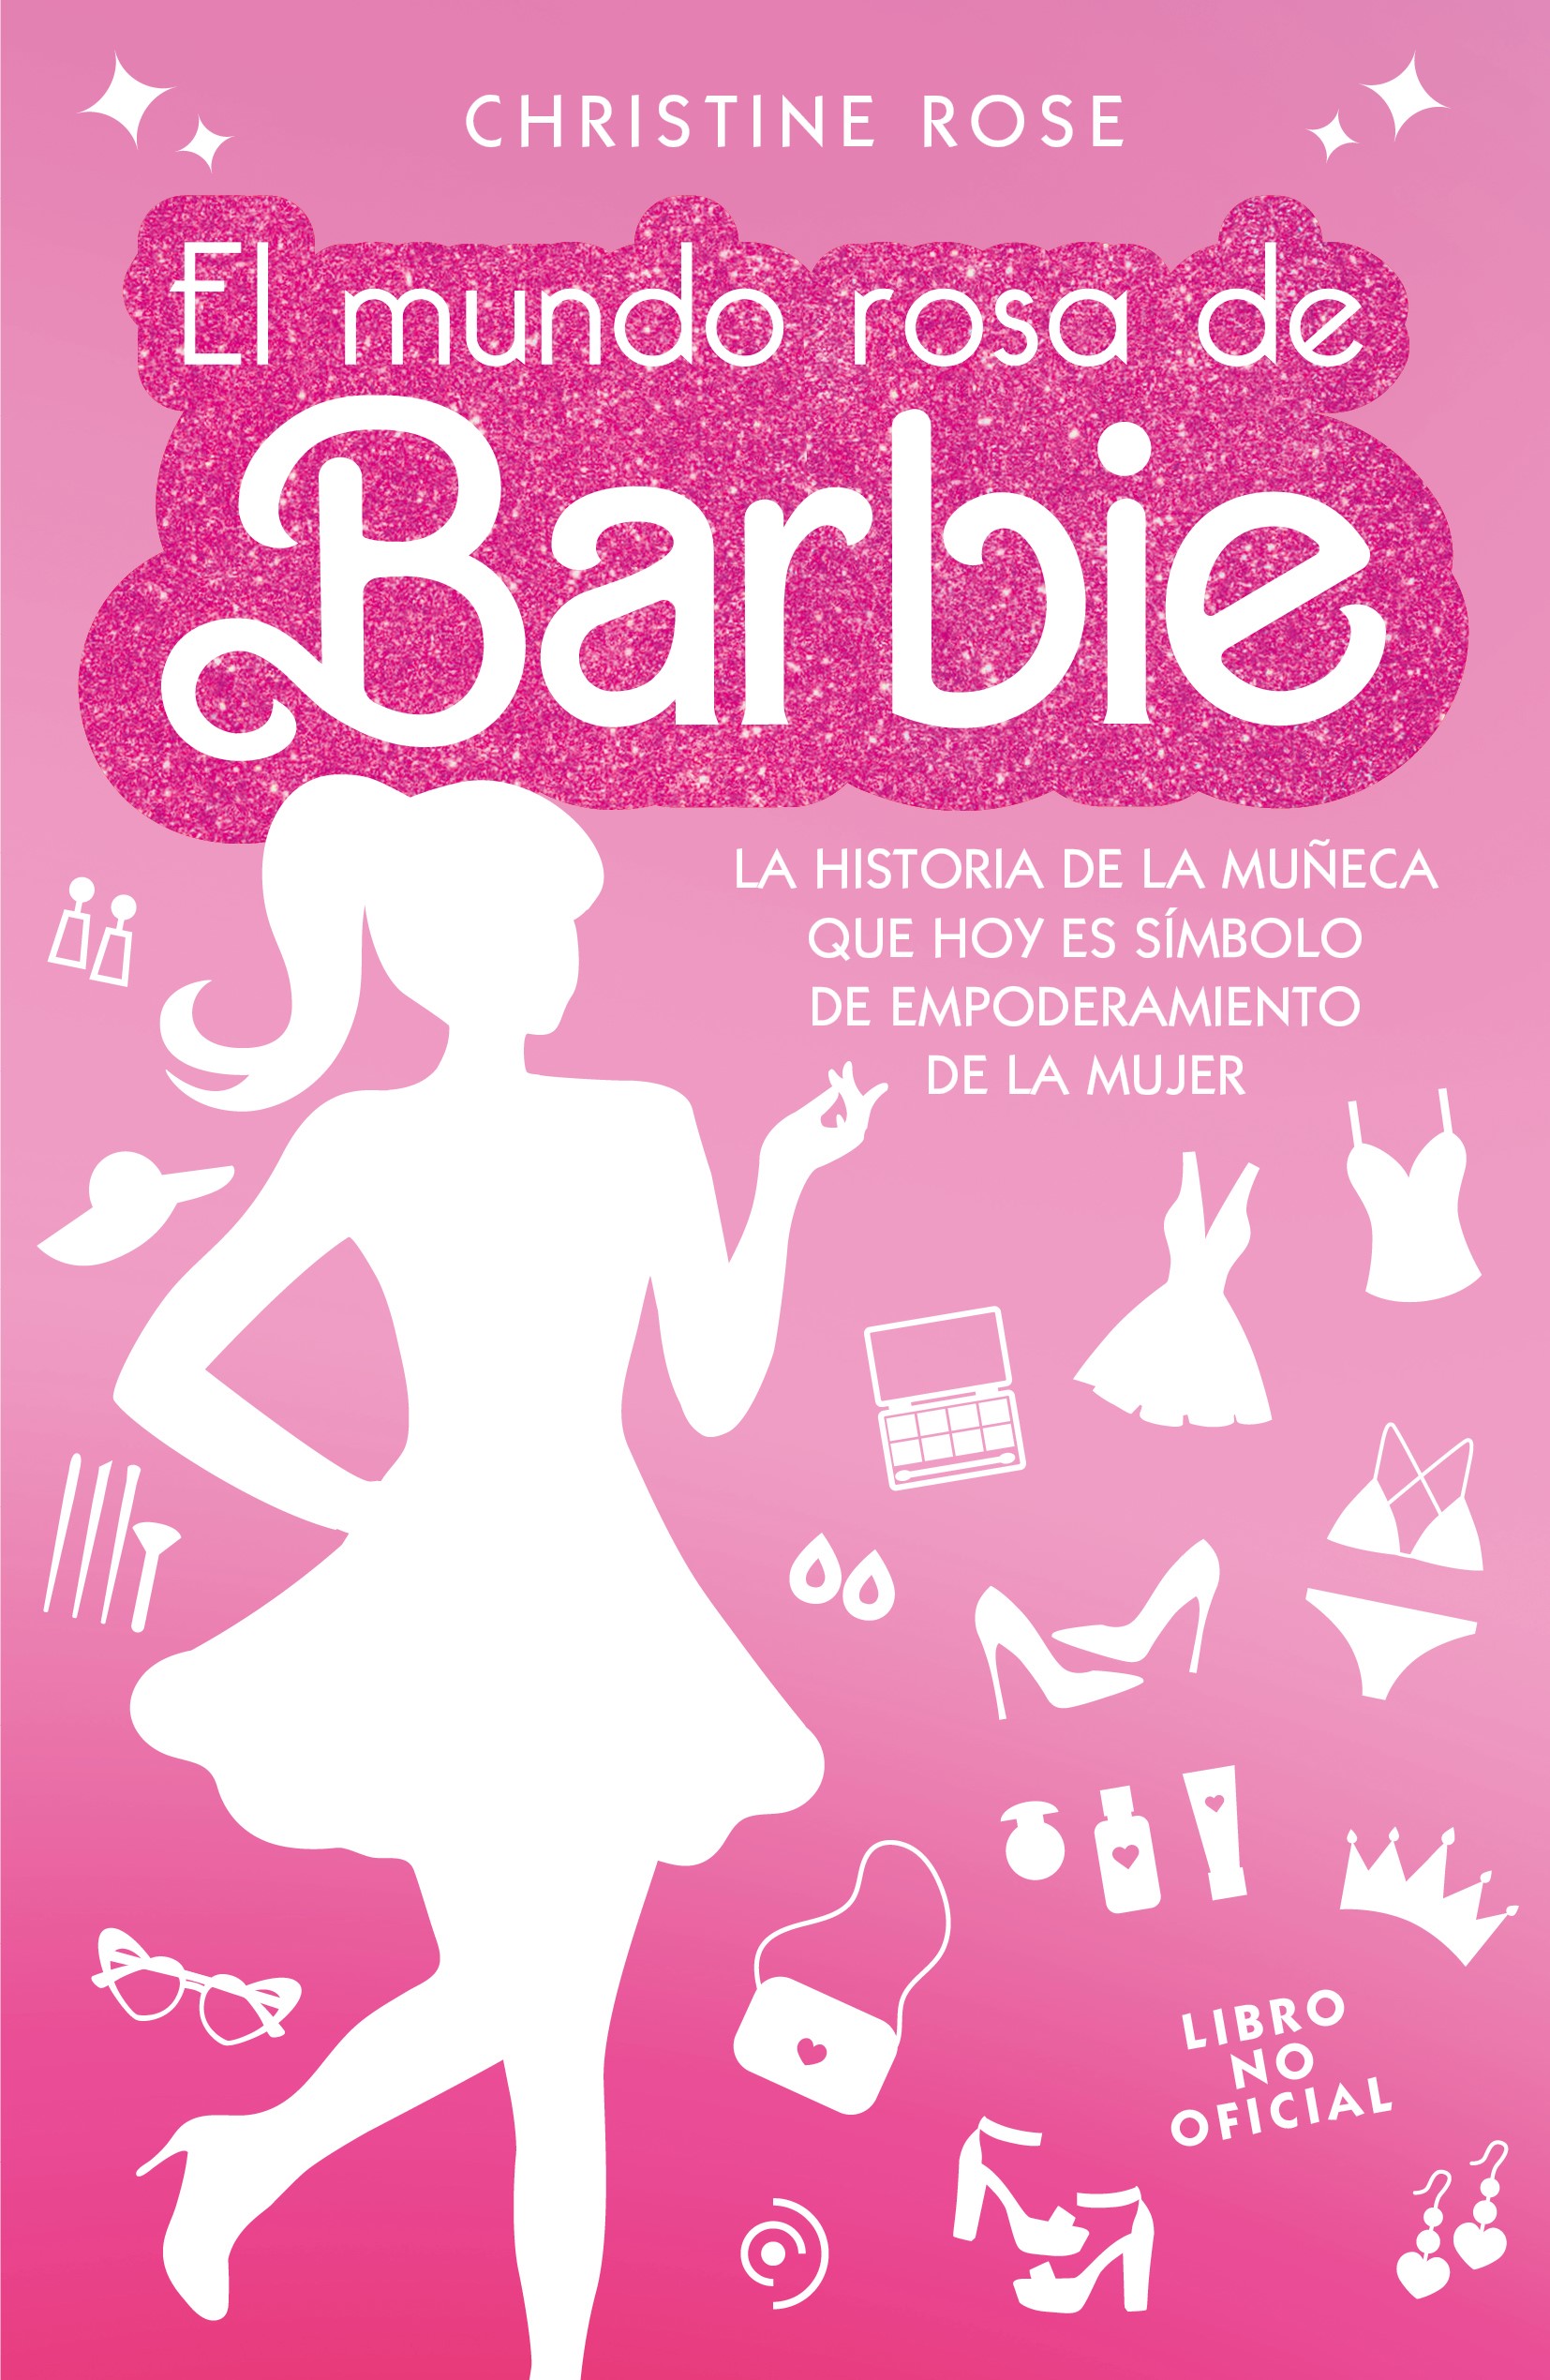 David Pastrnak Gave A Legendary Interview Involving 'Barbie Girl